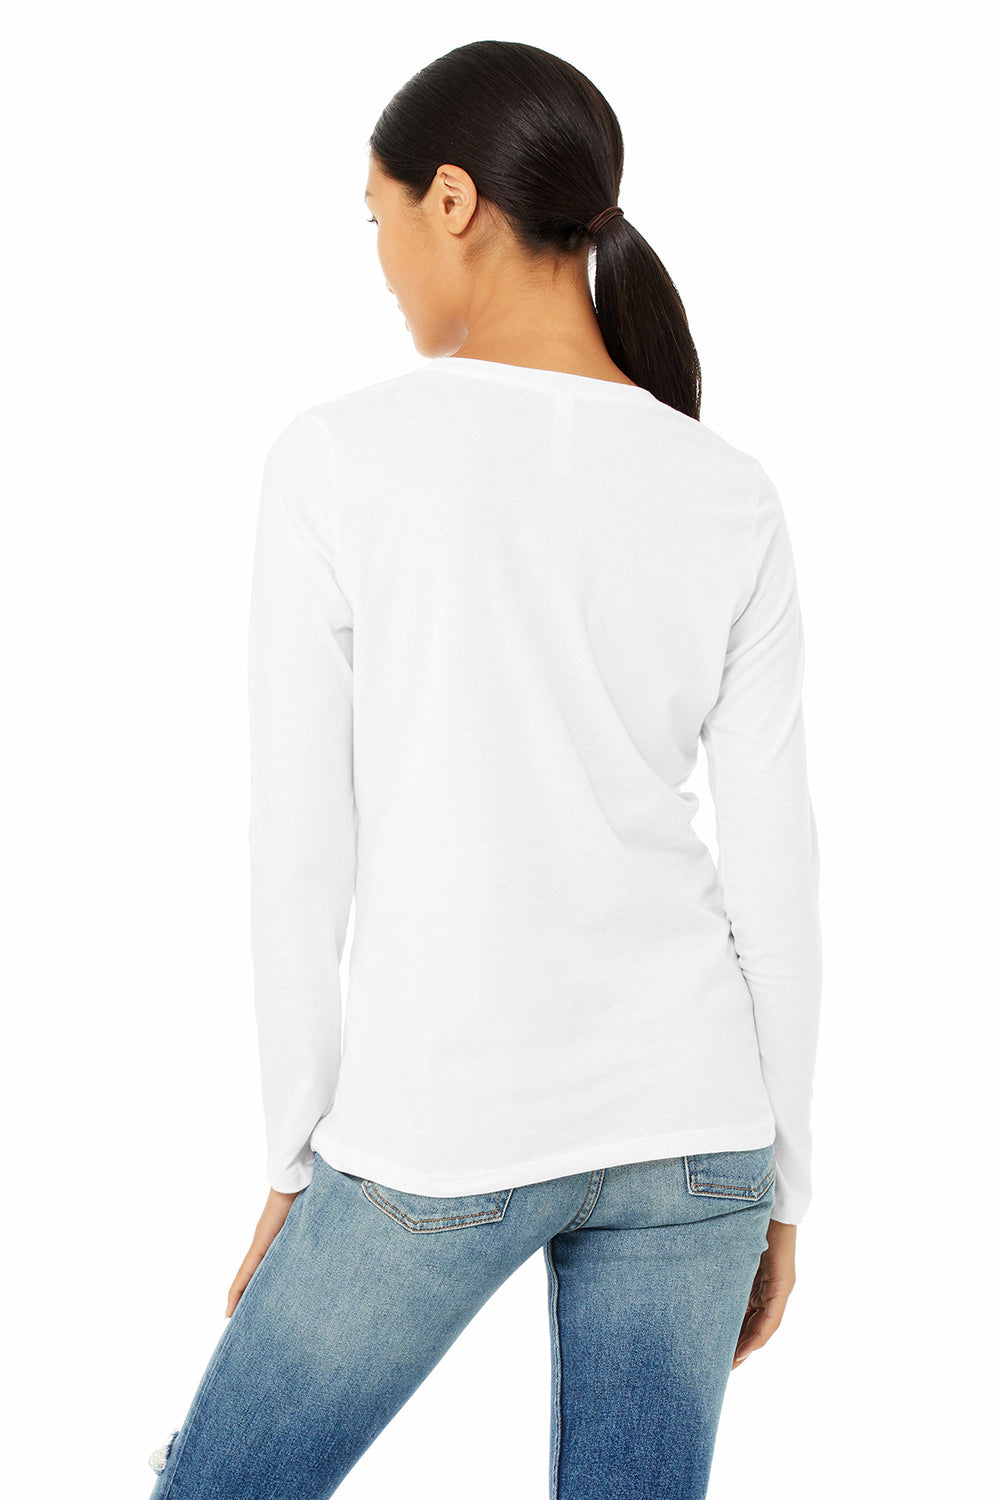 Bella + Canvas B6500/6500 Womens Jersey Long Sleeve Crewneck T-Shirt White Model Back